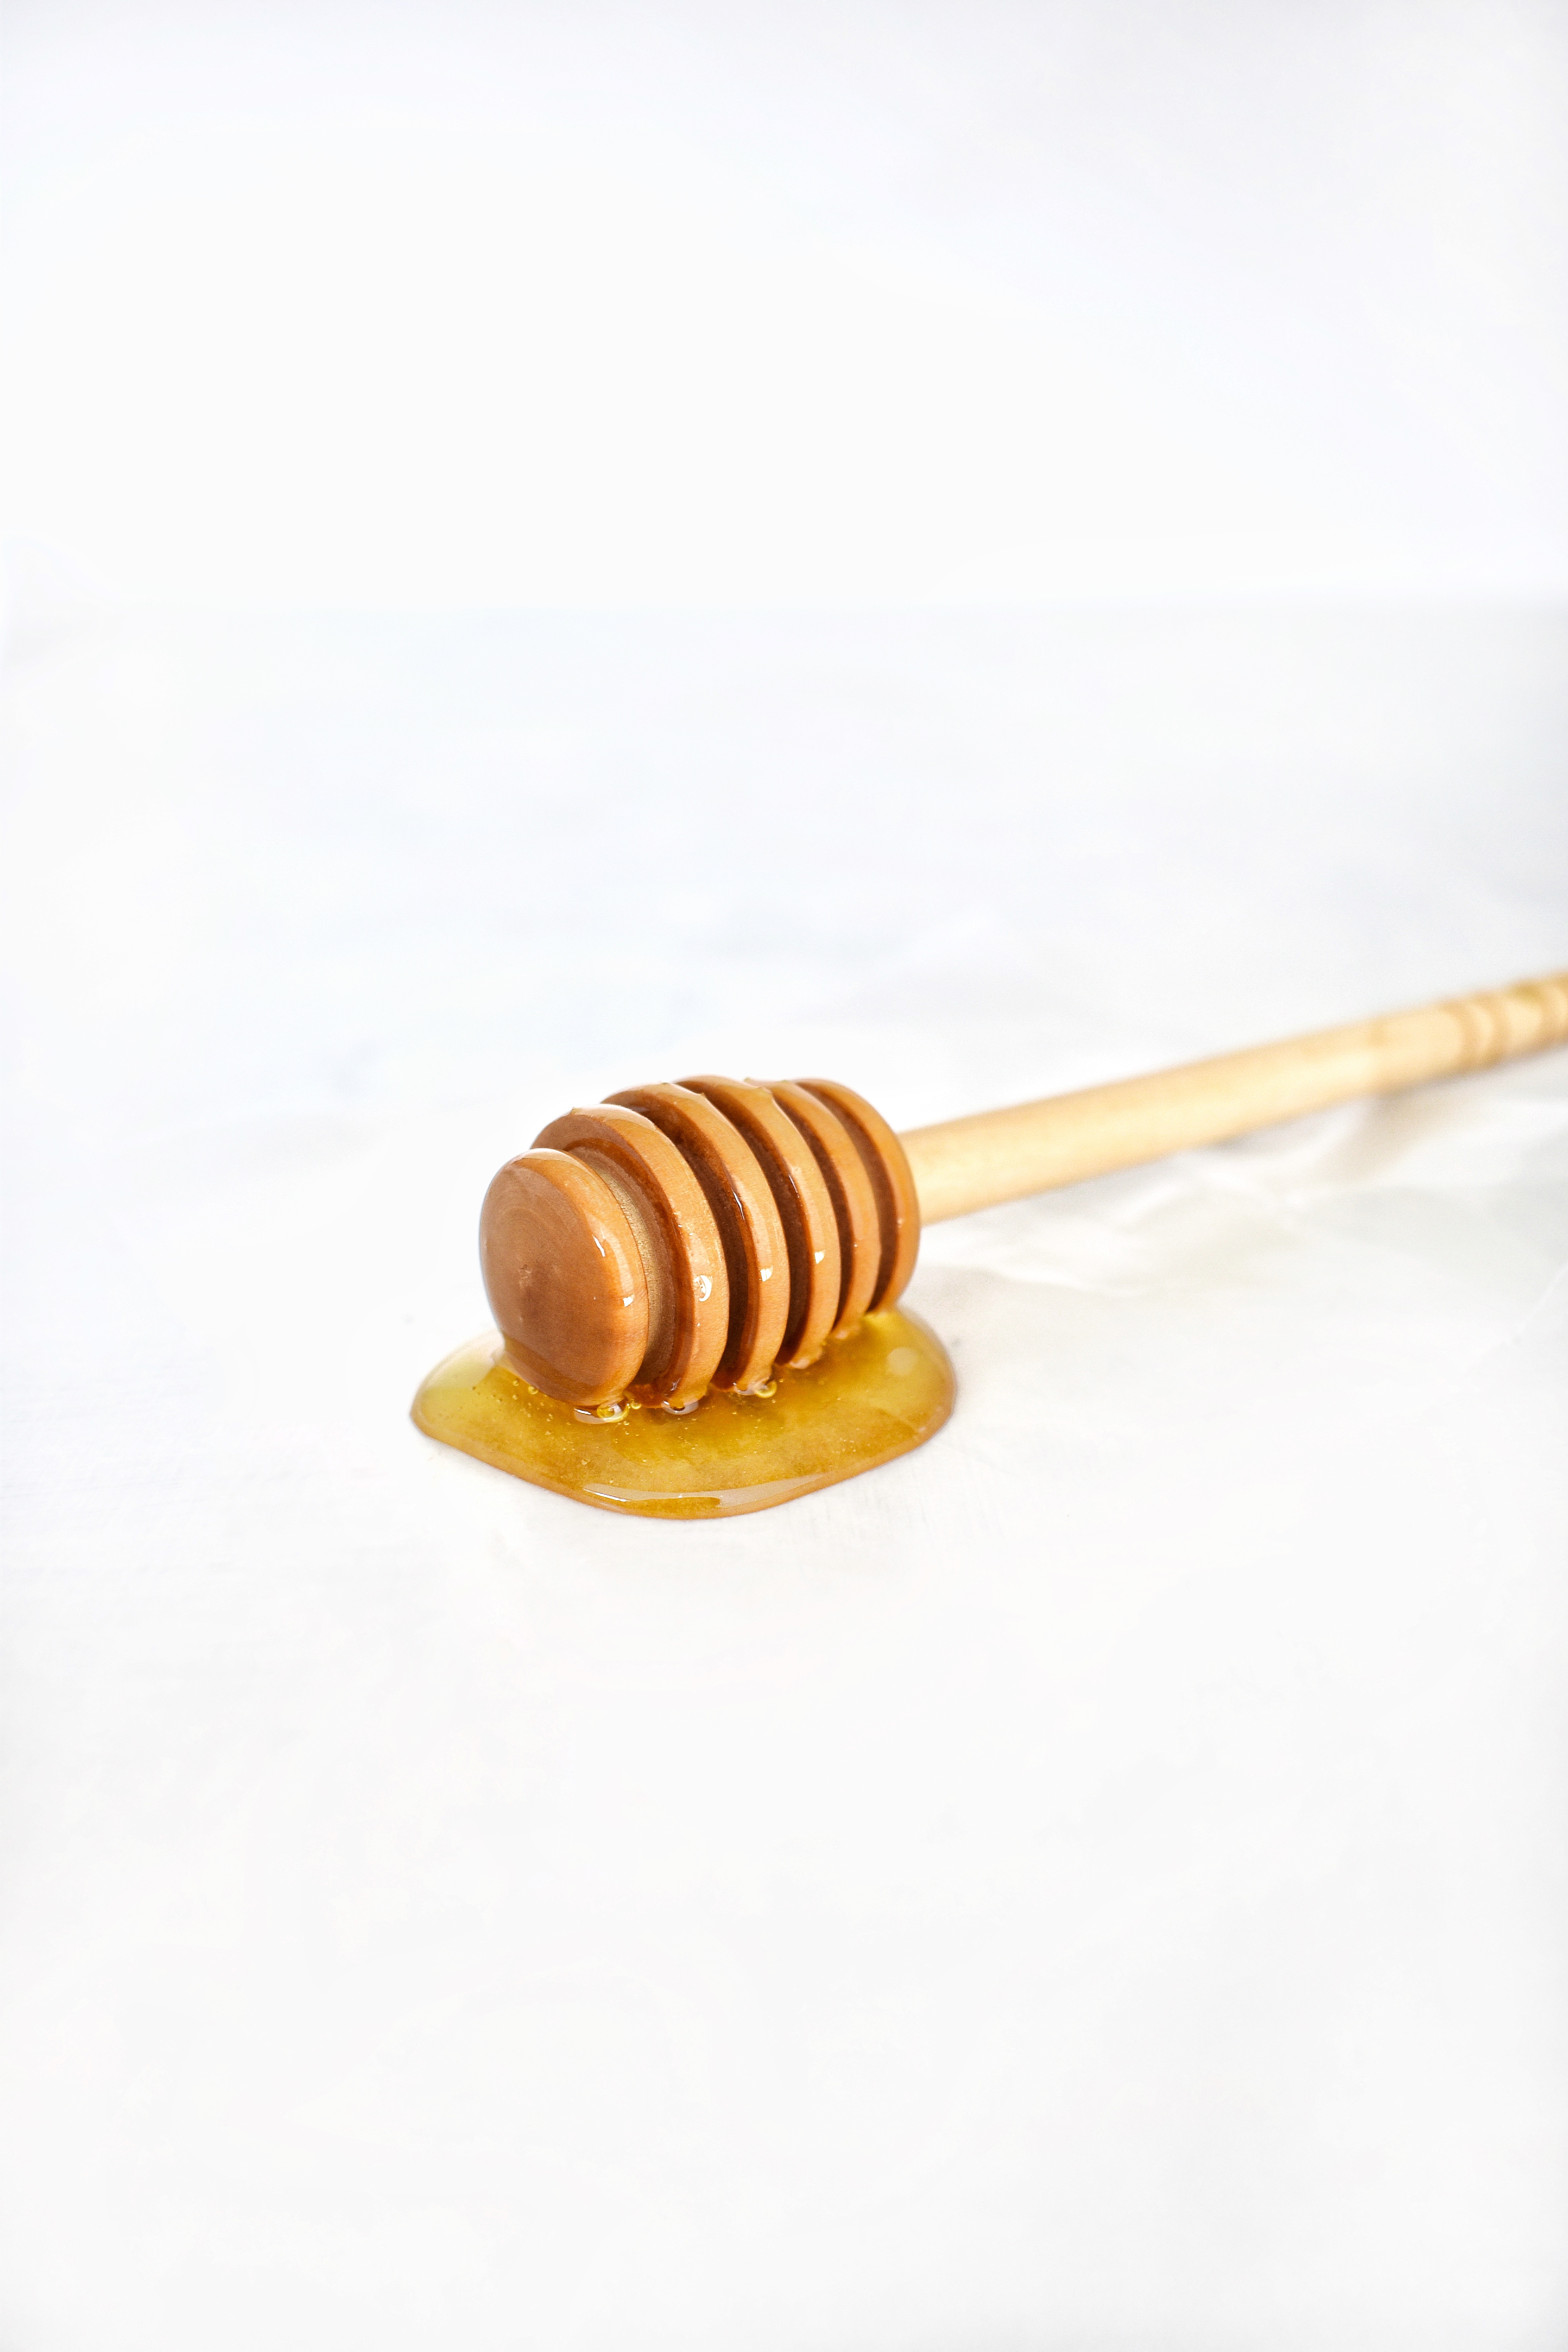 wand of honey sitting on a white background 